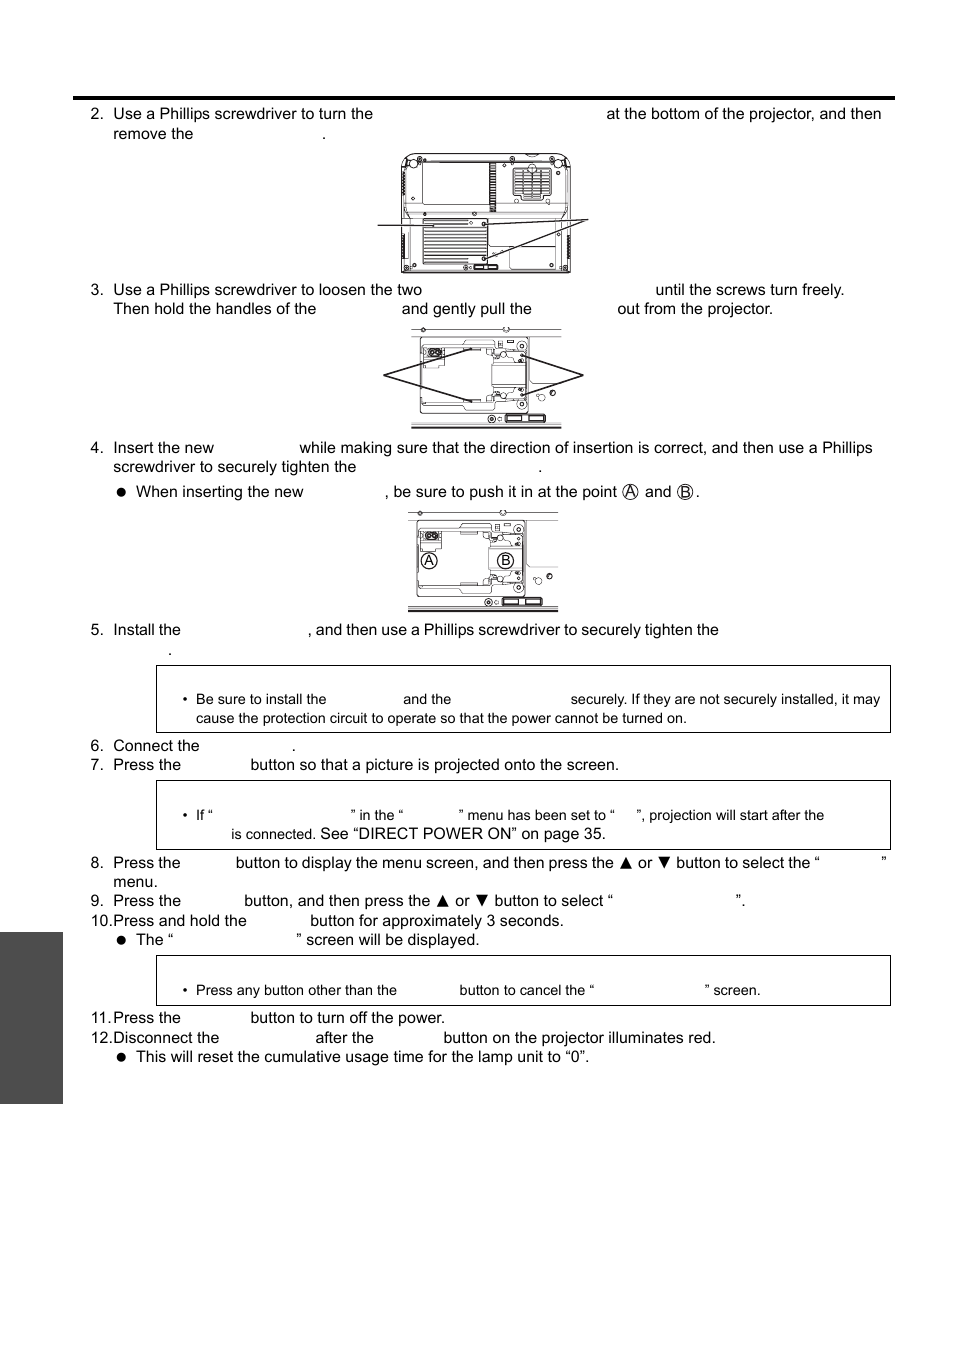 Nglish - 42, Care and replacement, Maintenance | Panasonic PT-LB51SU Manuel d'utilisation | Page 42 / 62